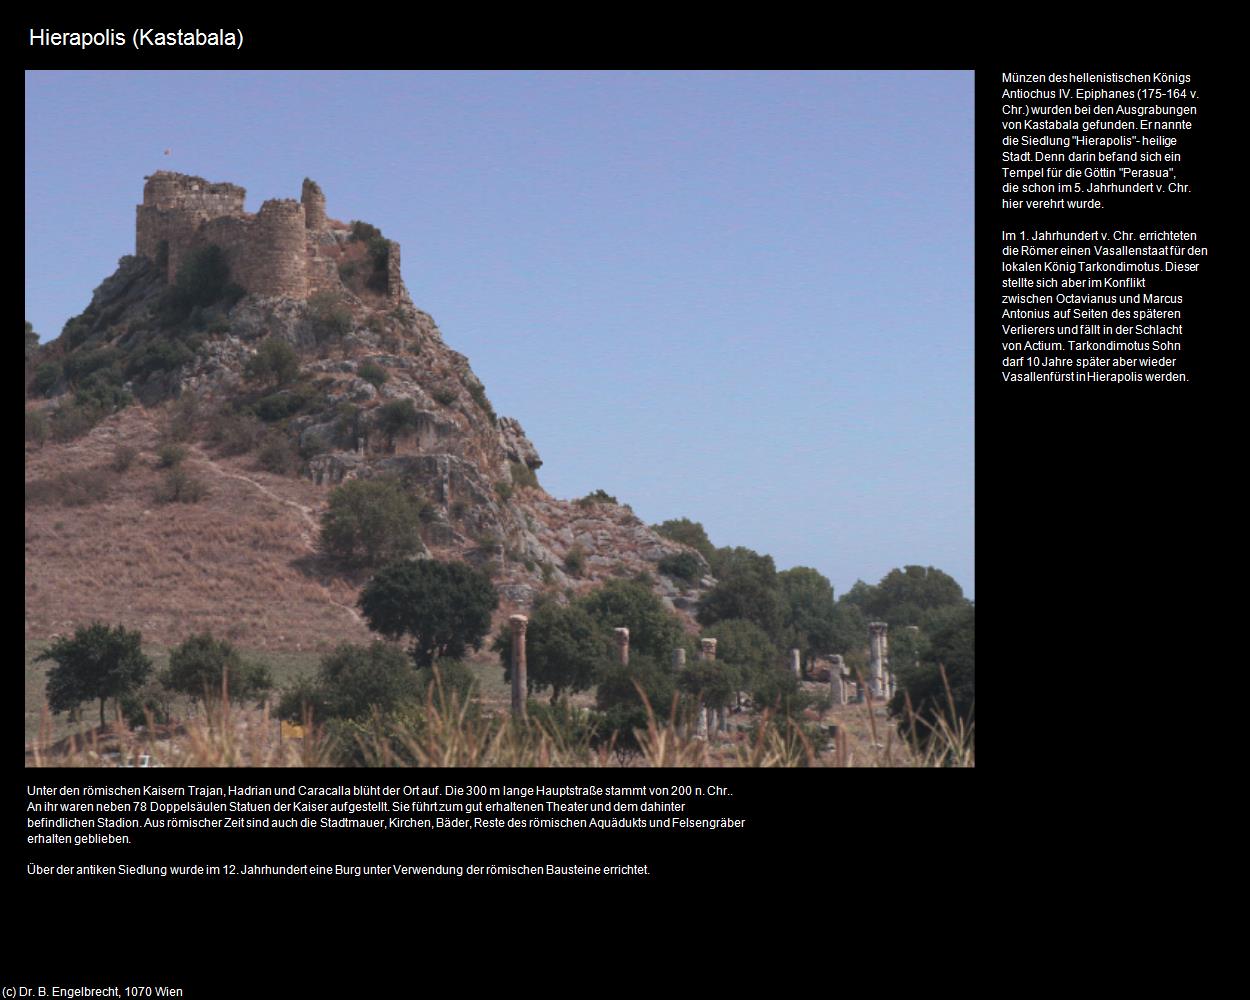 Hierapolis (Kastabala) in TÜRKEI